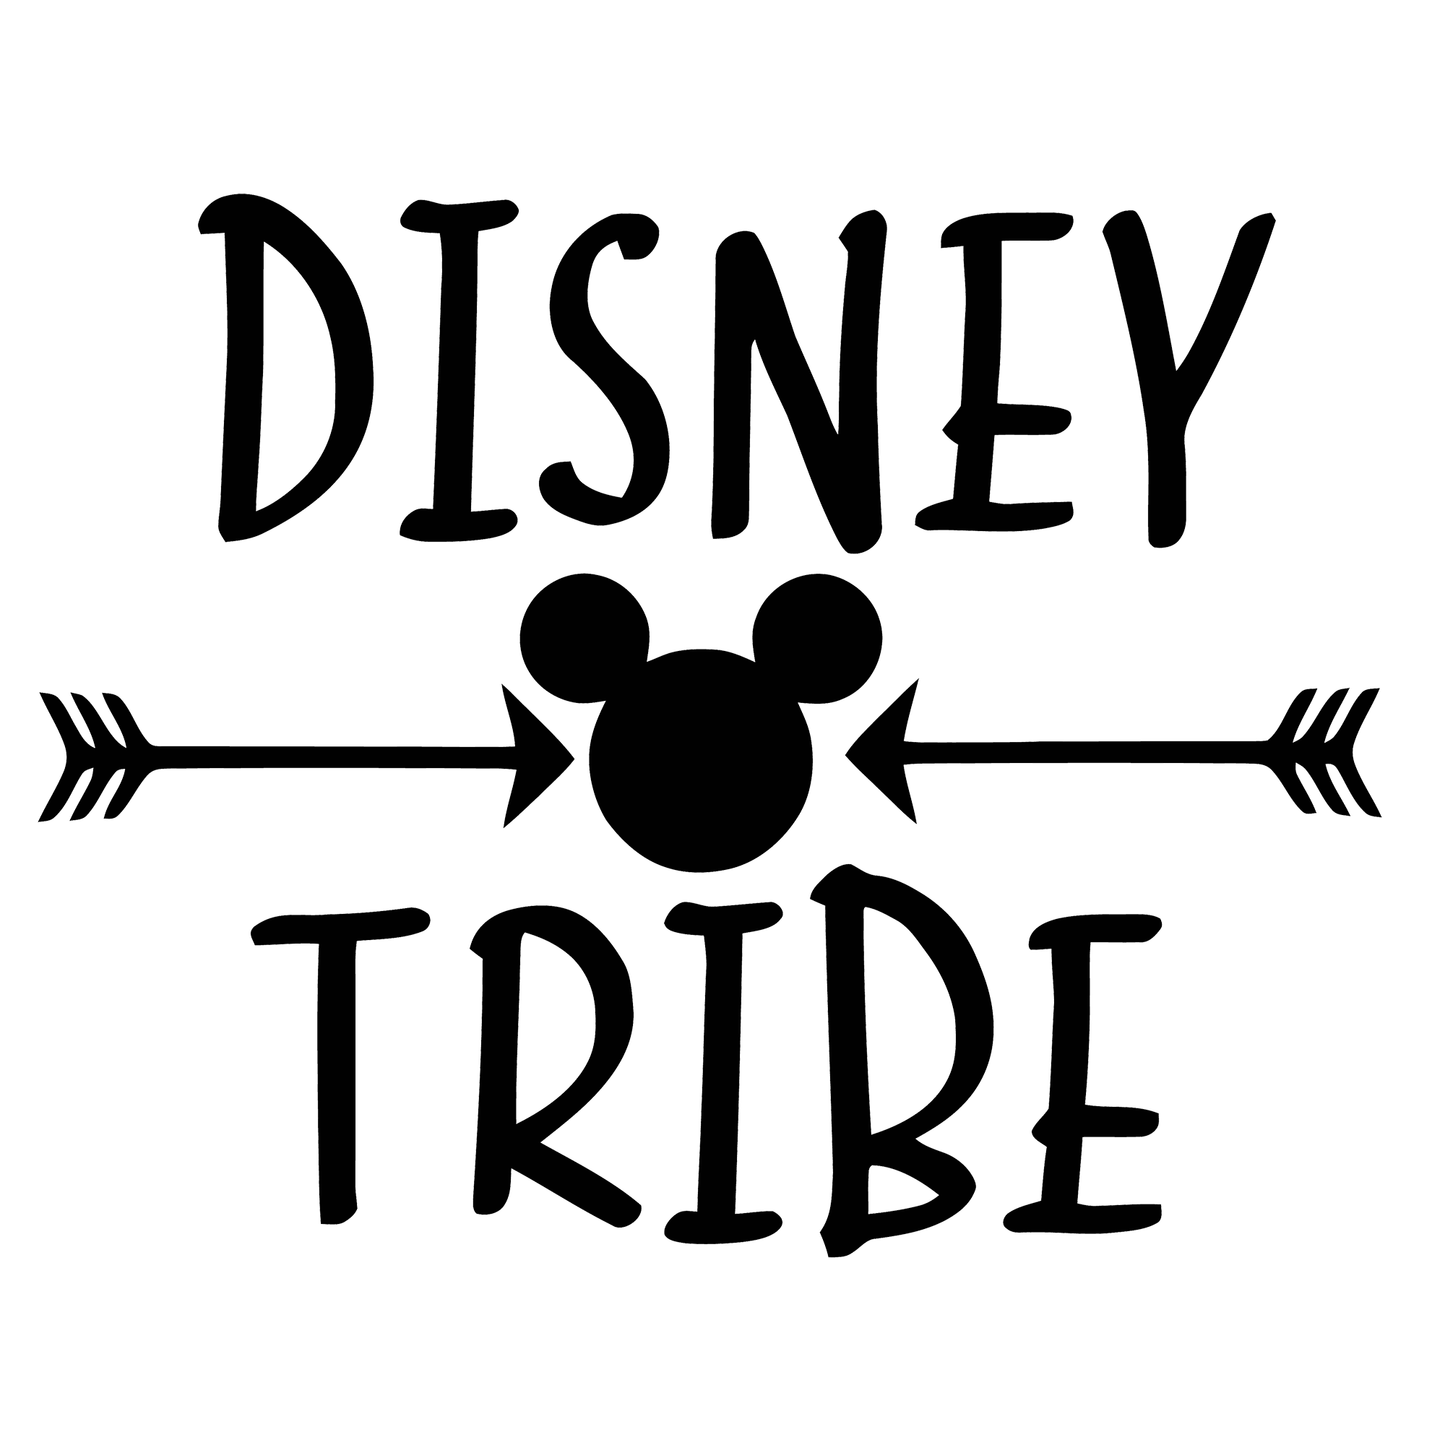 Disney Tribe Boho Hidden Mickey Vinyl Decal Sticker